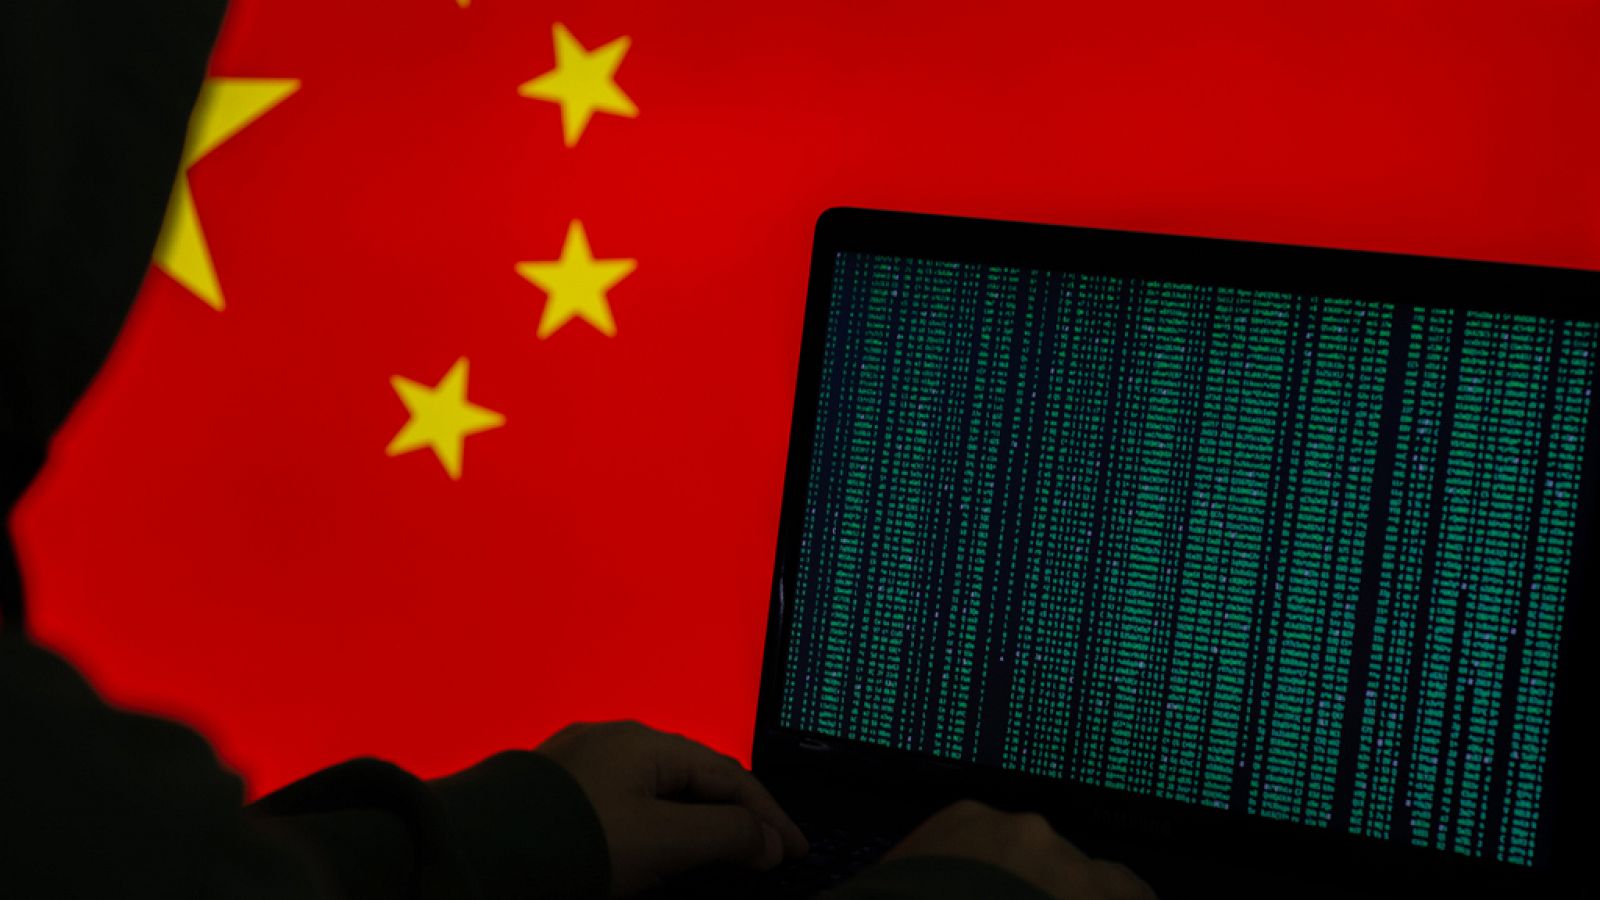  Europa abierta - La UE se protege ante el ciberespionaje chino - 19/03/19 - escuchar ahora